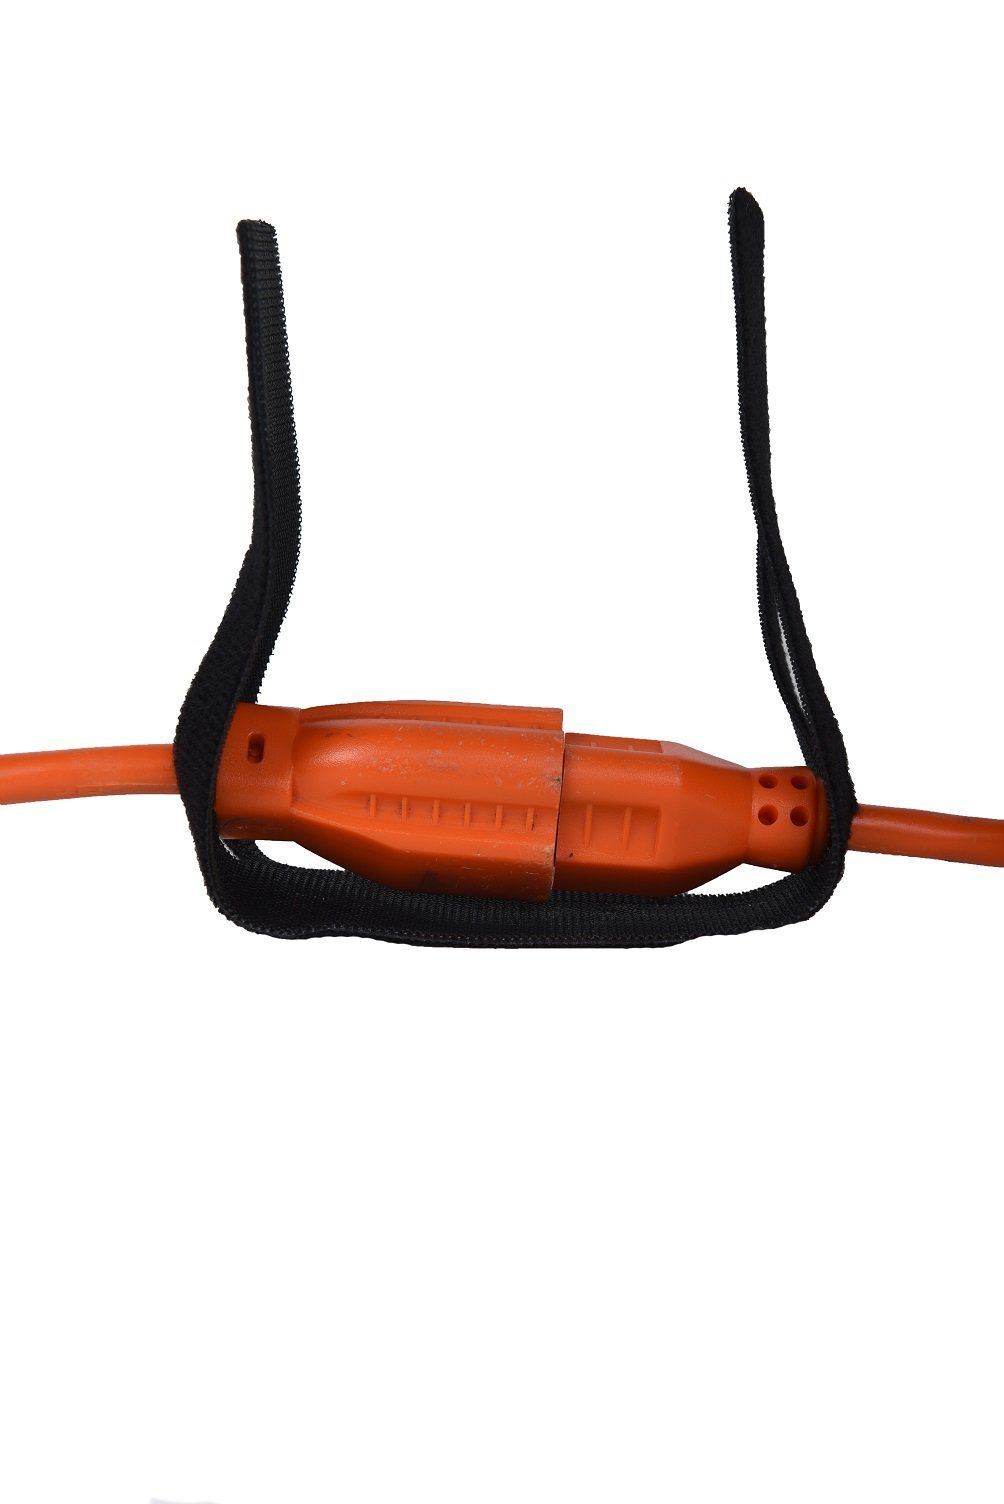 Hook-And-Loop Fastener Safety Strap 2 in. W x 20 in. L , No Logo, Orange